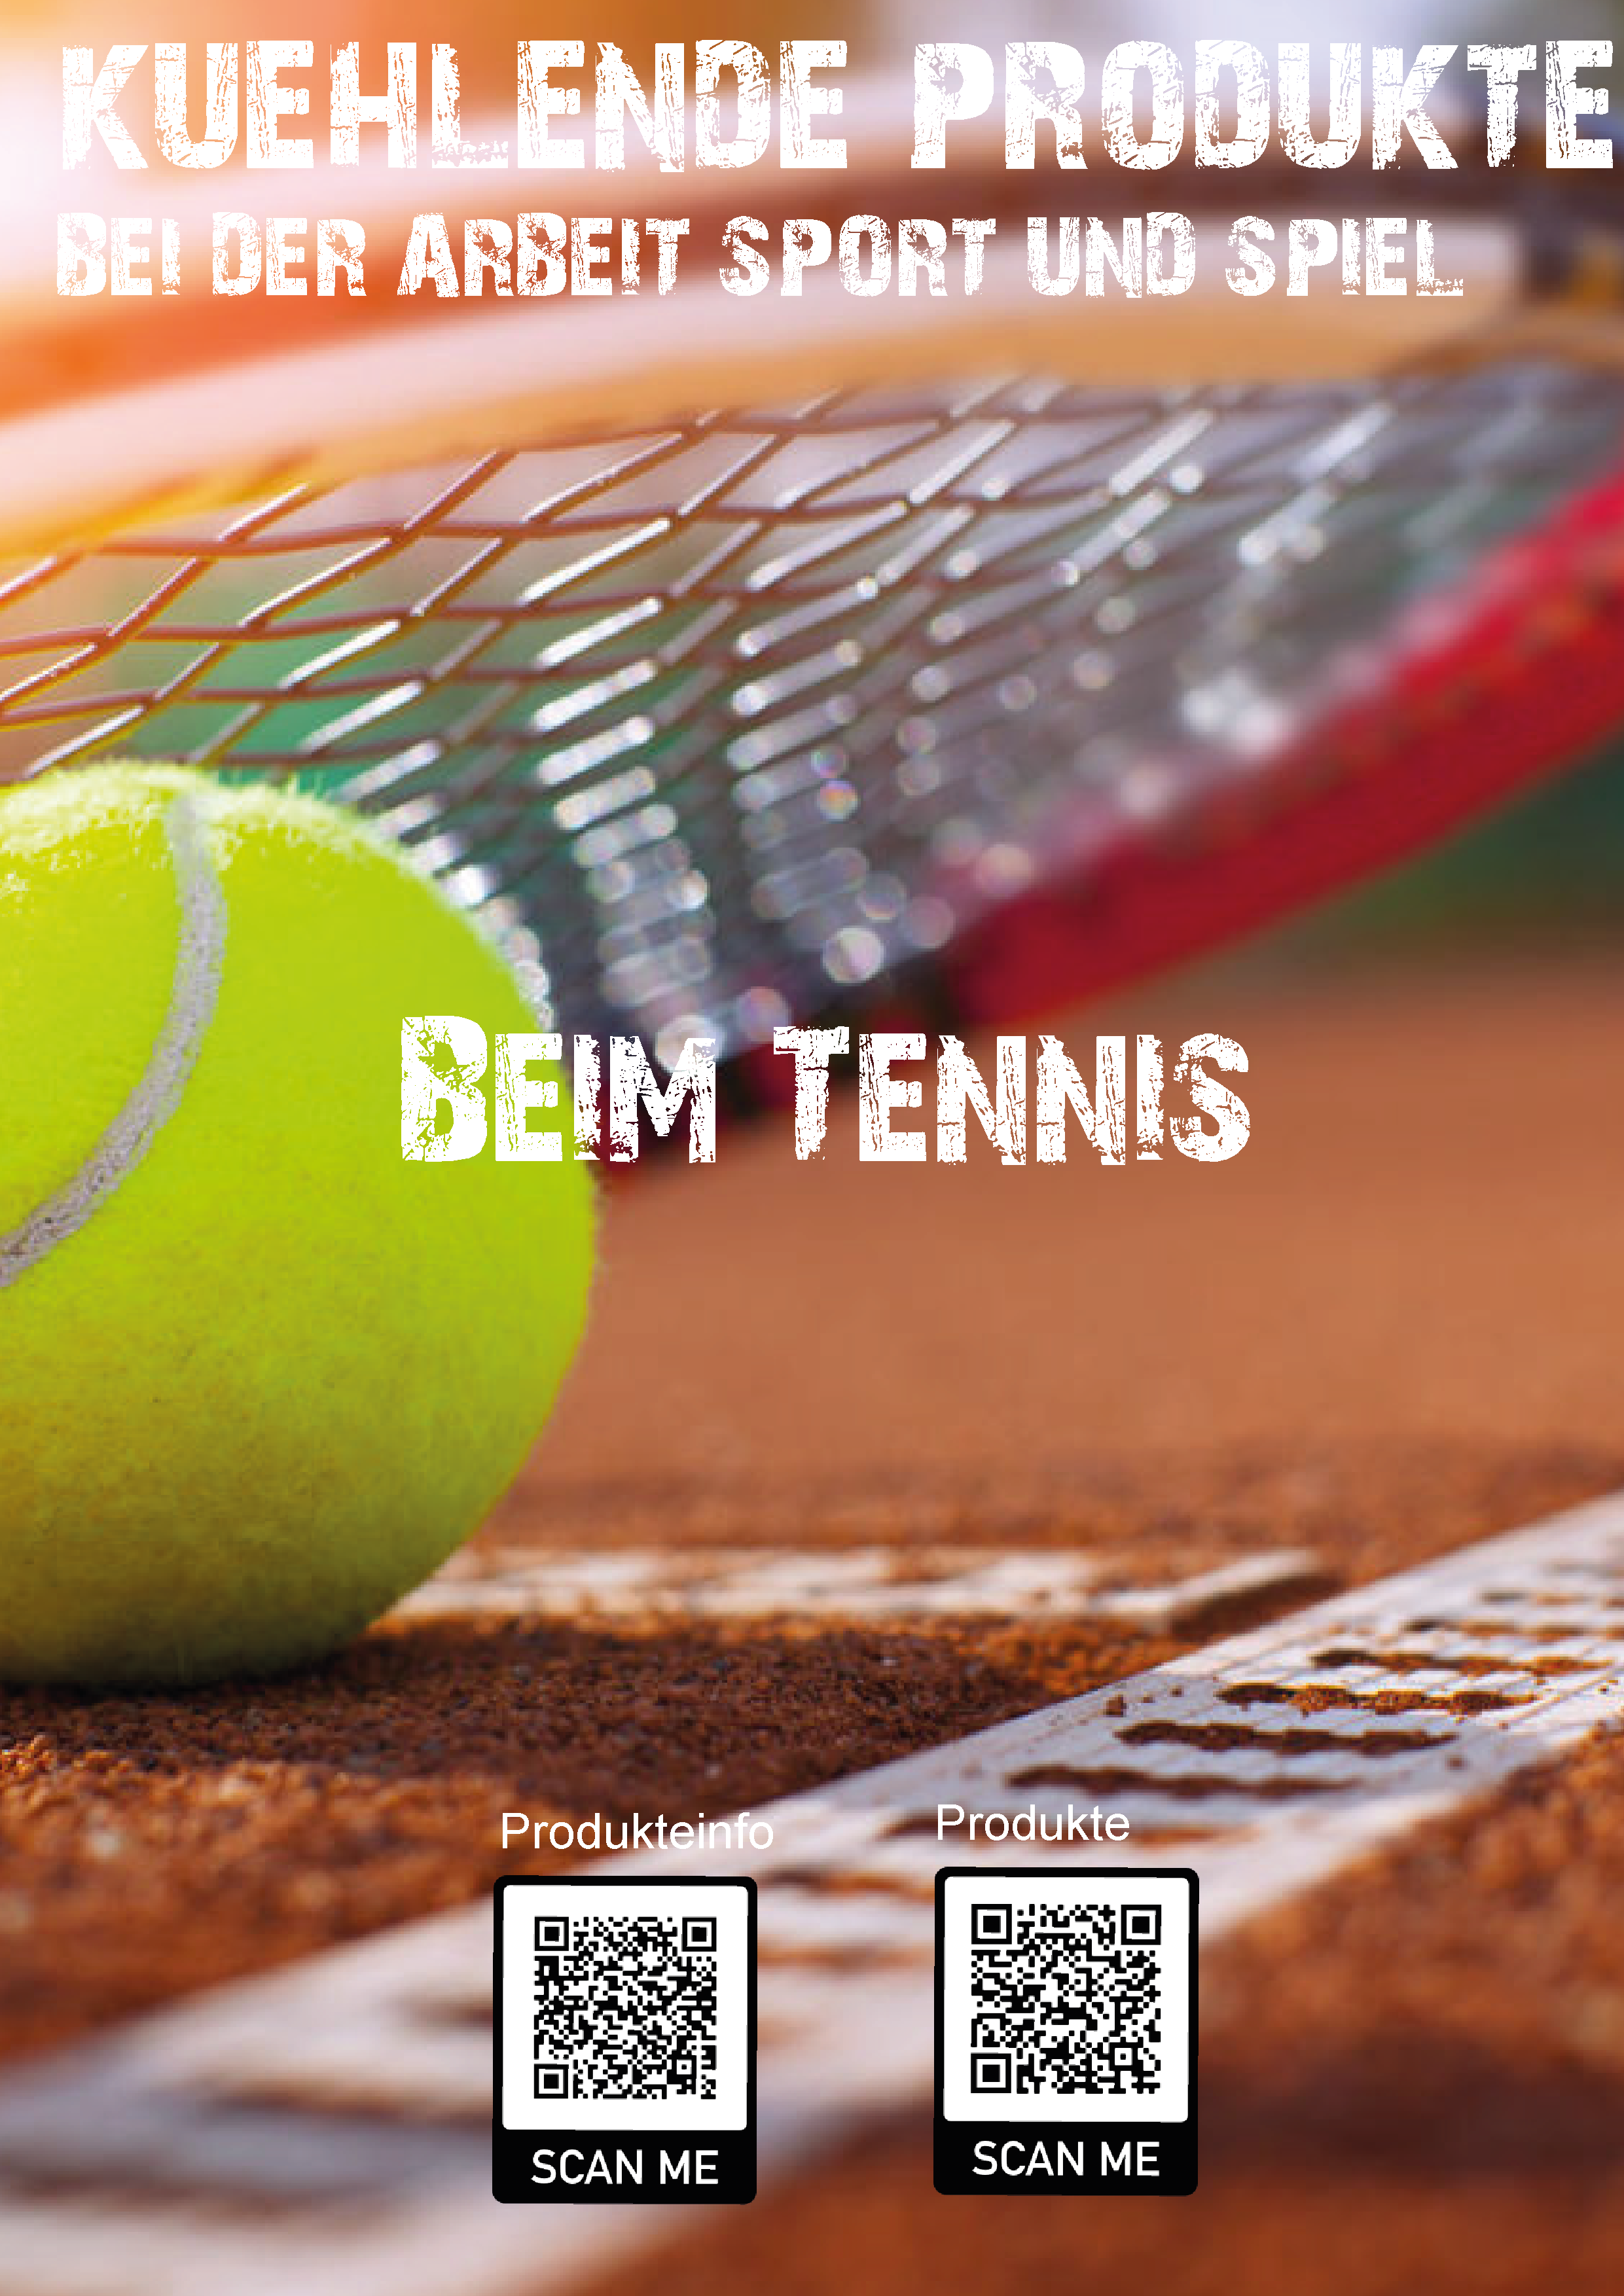 image-11752478-Tennis-01-c20ad.w640.jpg